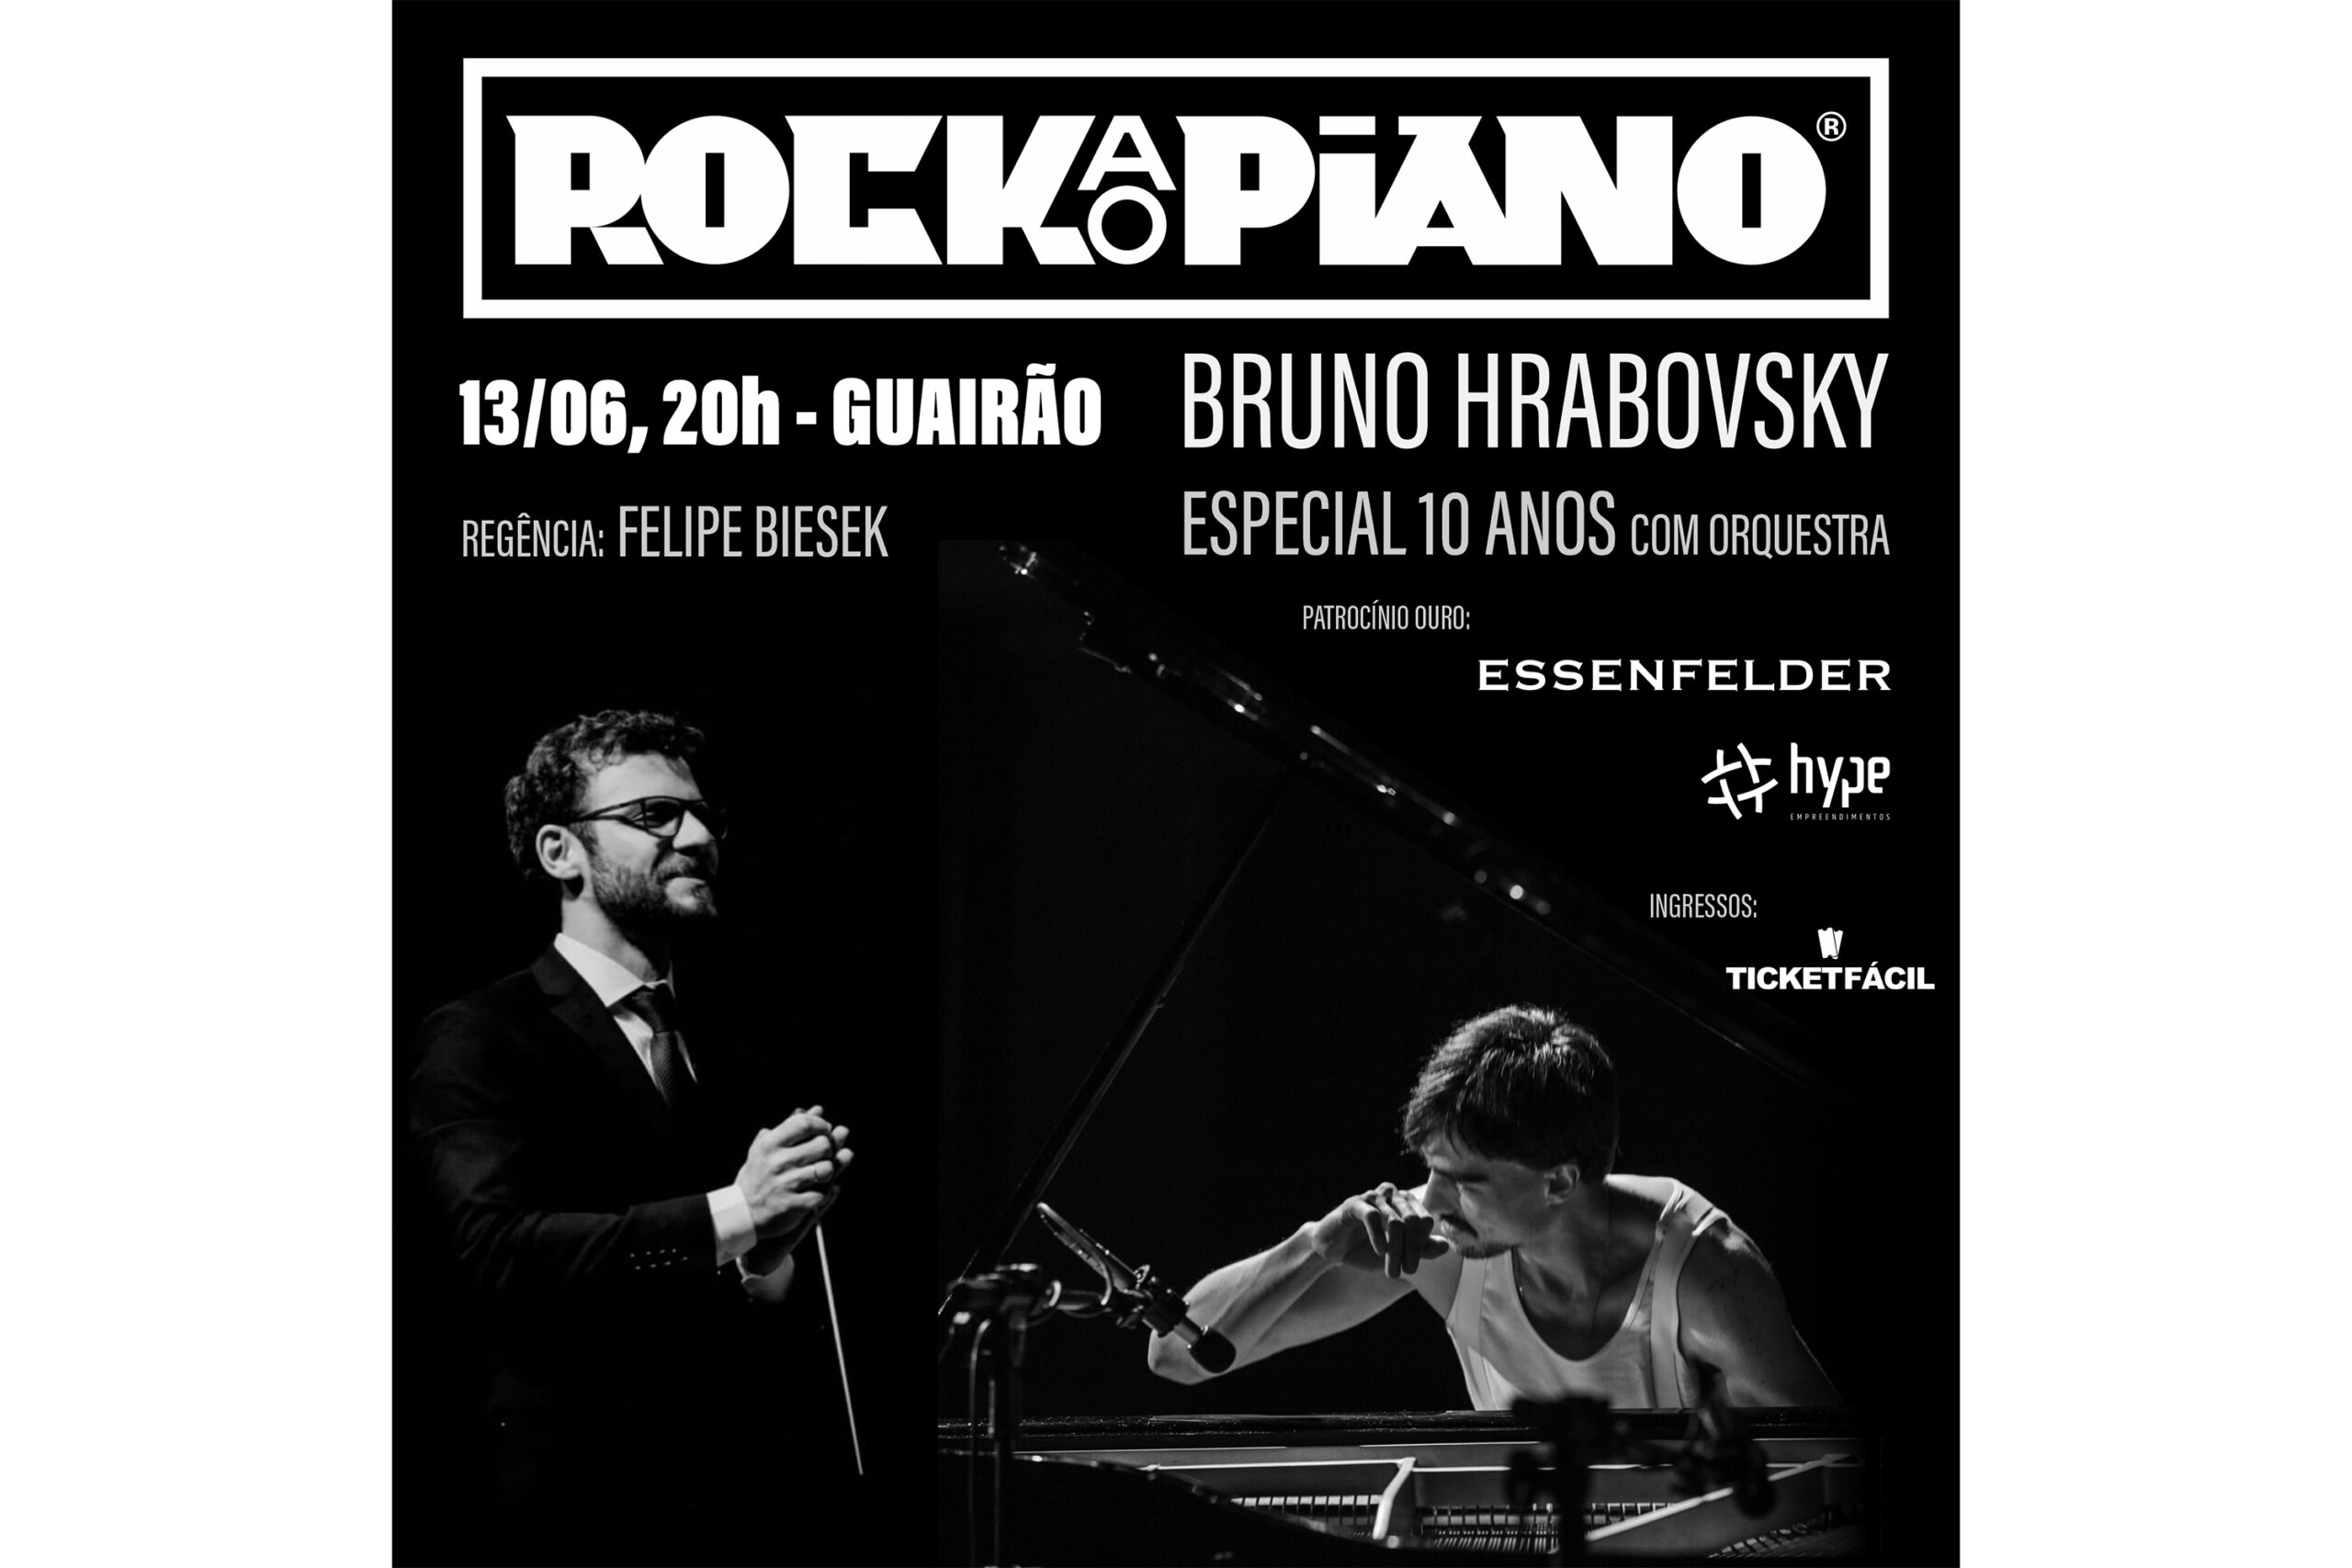 Teatro Guaíra recebe projeto Rock ao Piano nesta terça-feira